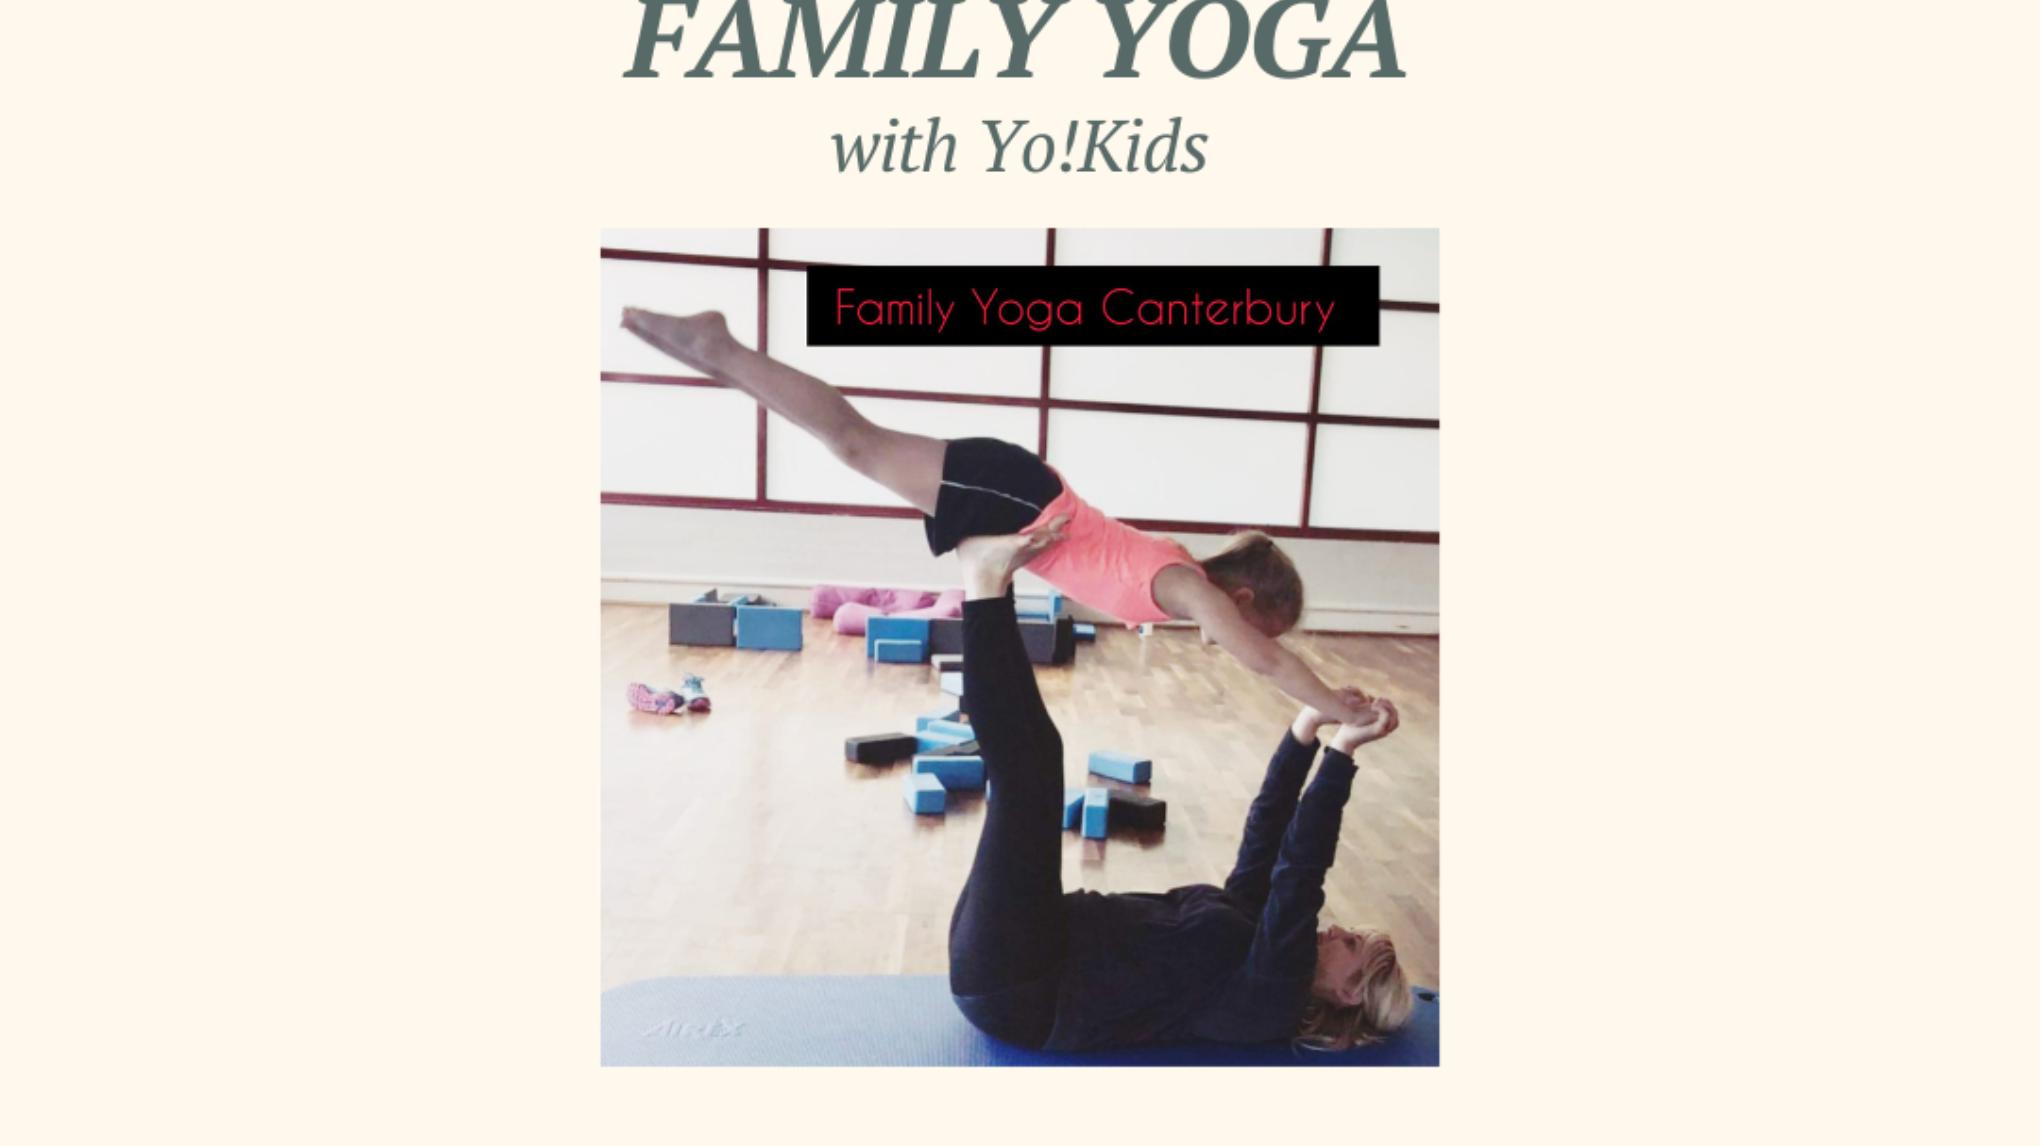 Family Yoga with Yo!Kids